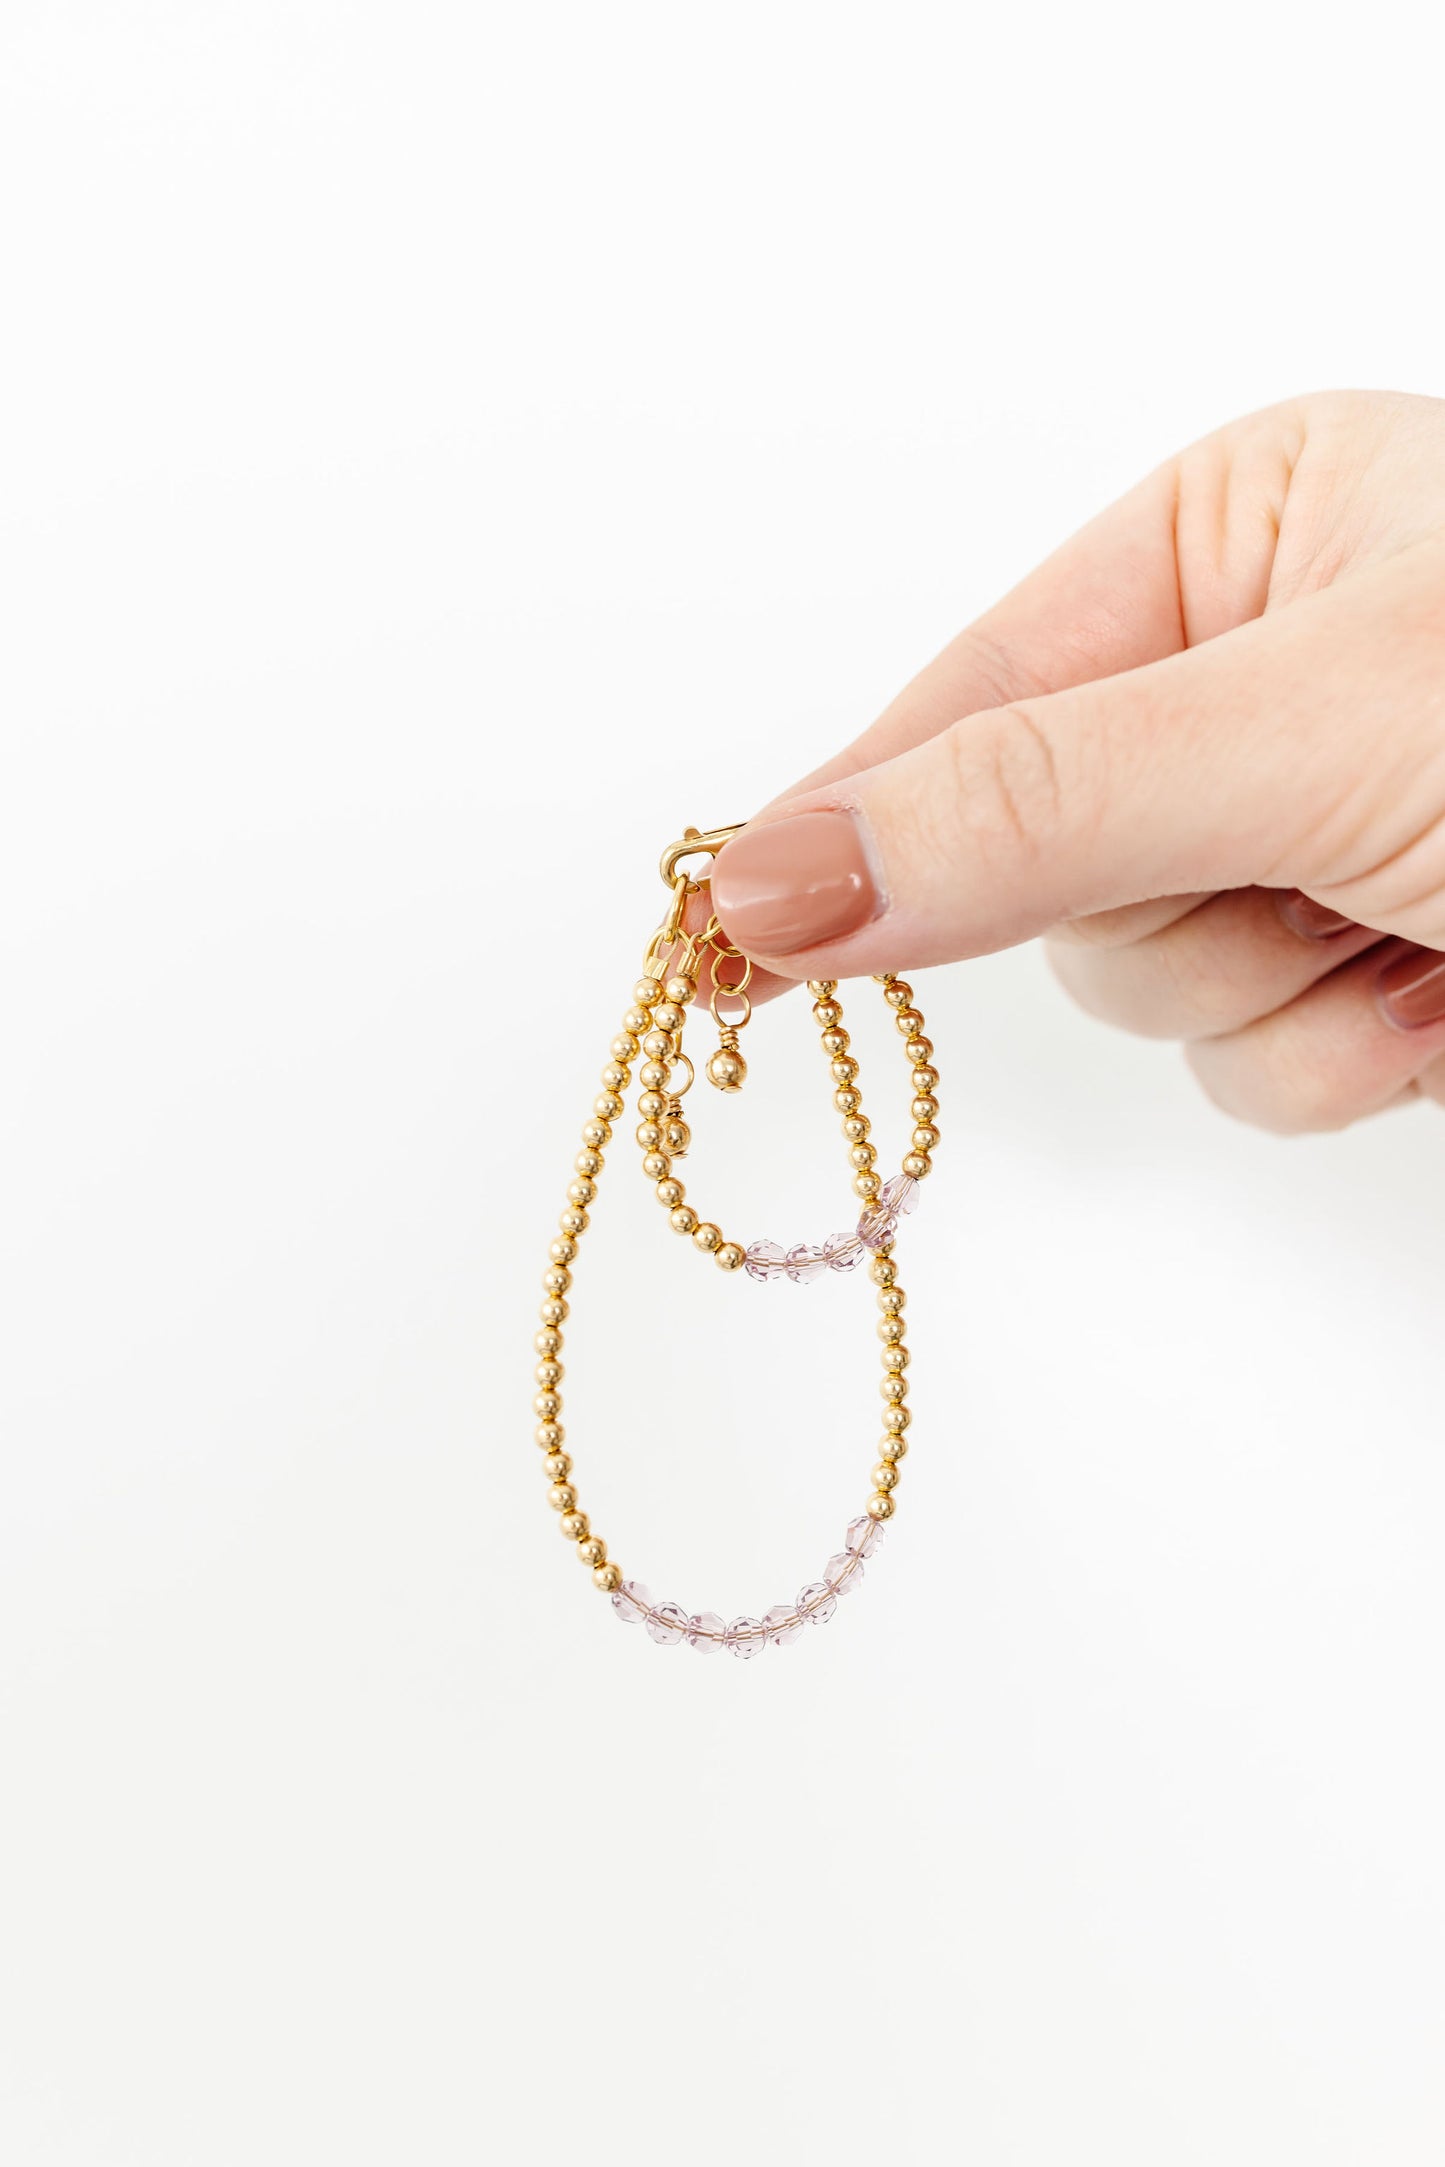 June Birthstone Adult Bracelet (3MM + 4MM beads)